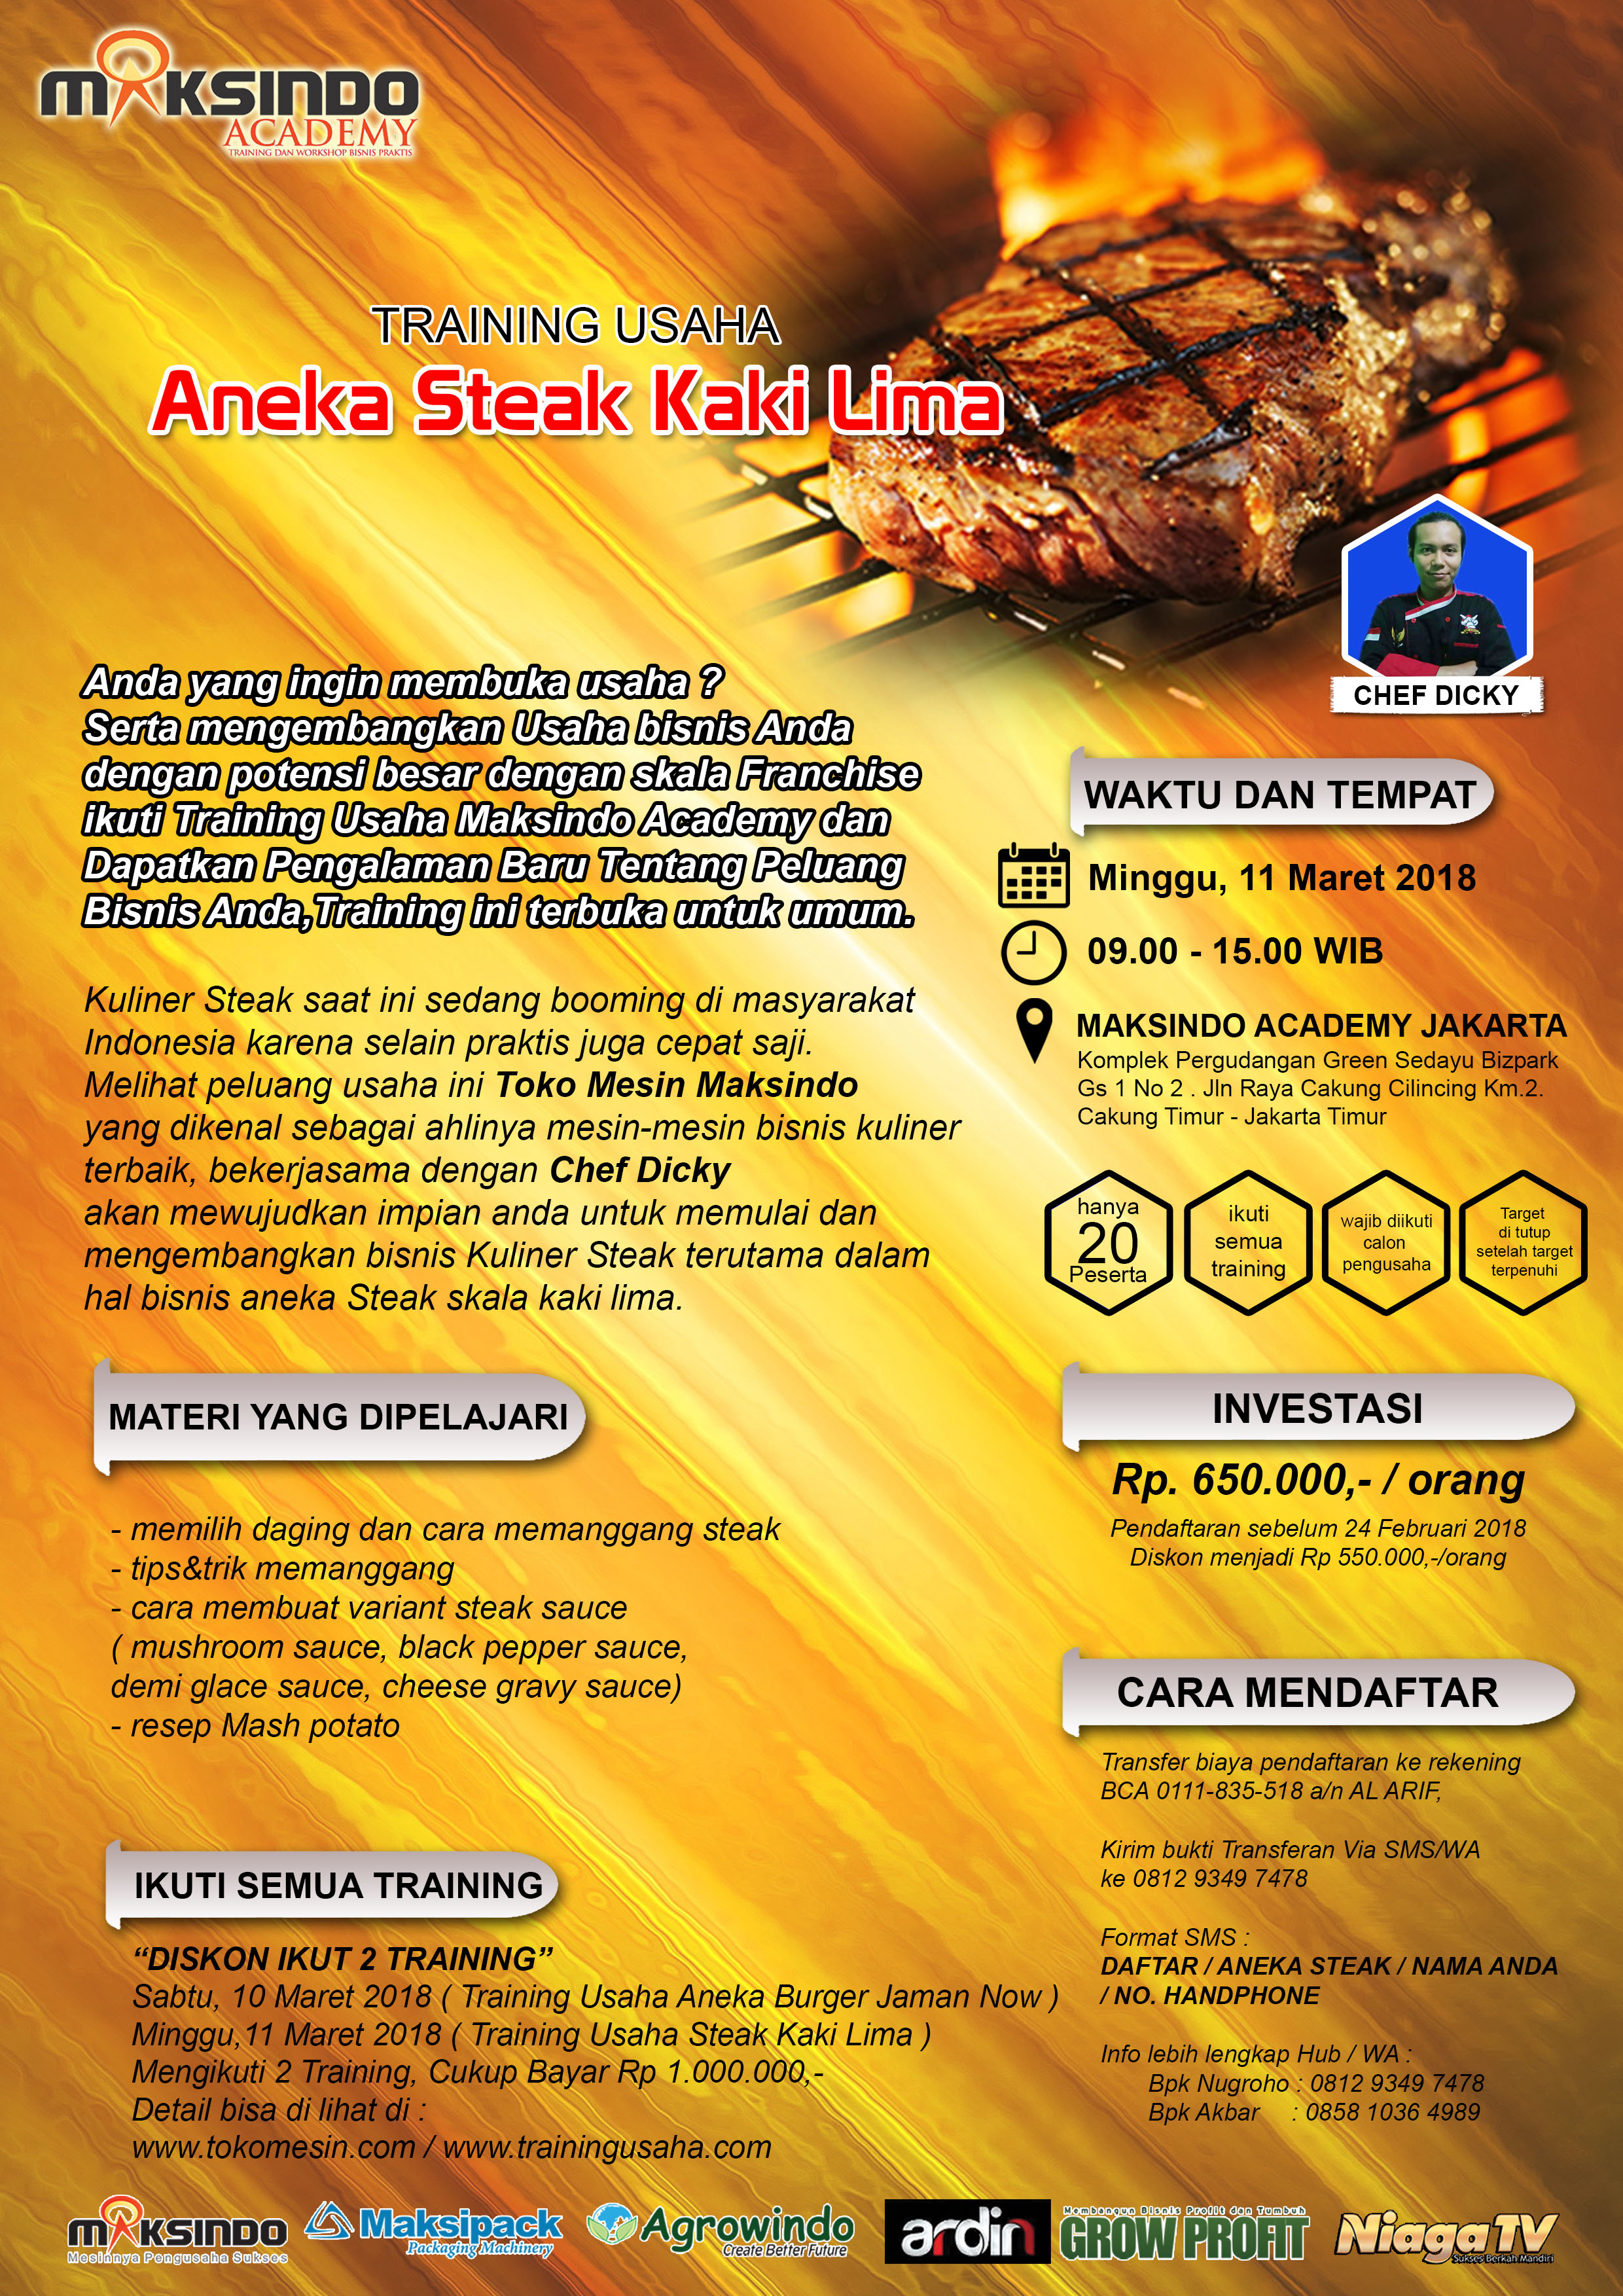 Training Usaha Aneka Steak Kaki Lima, 11 Maret 2018